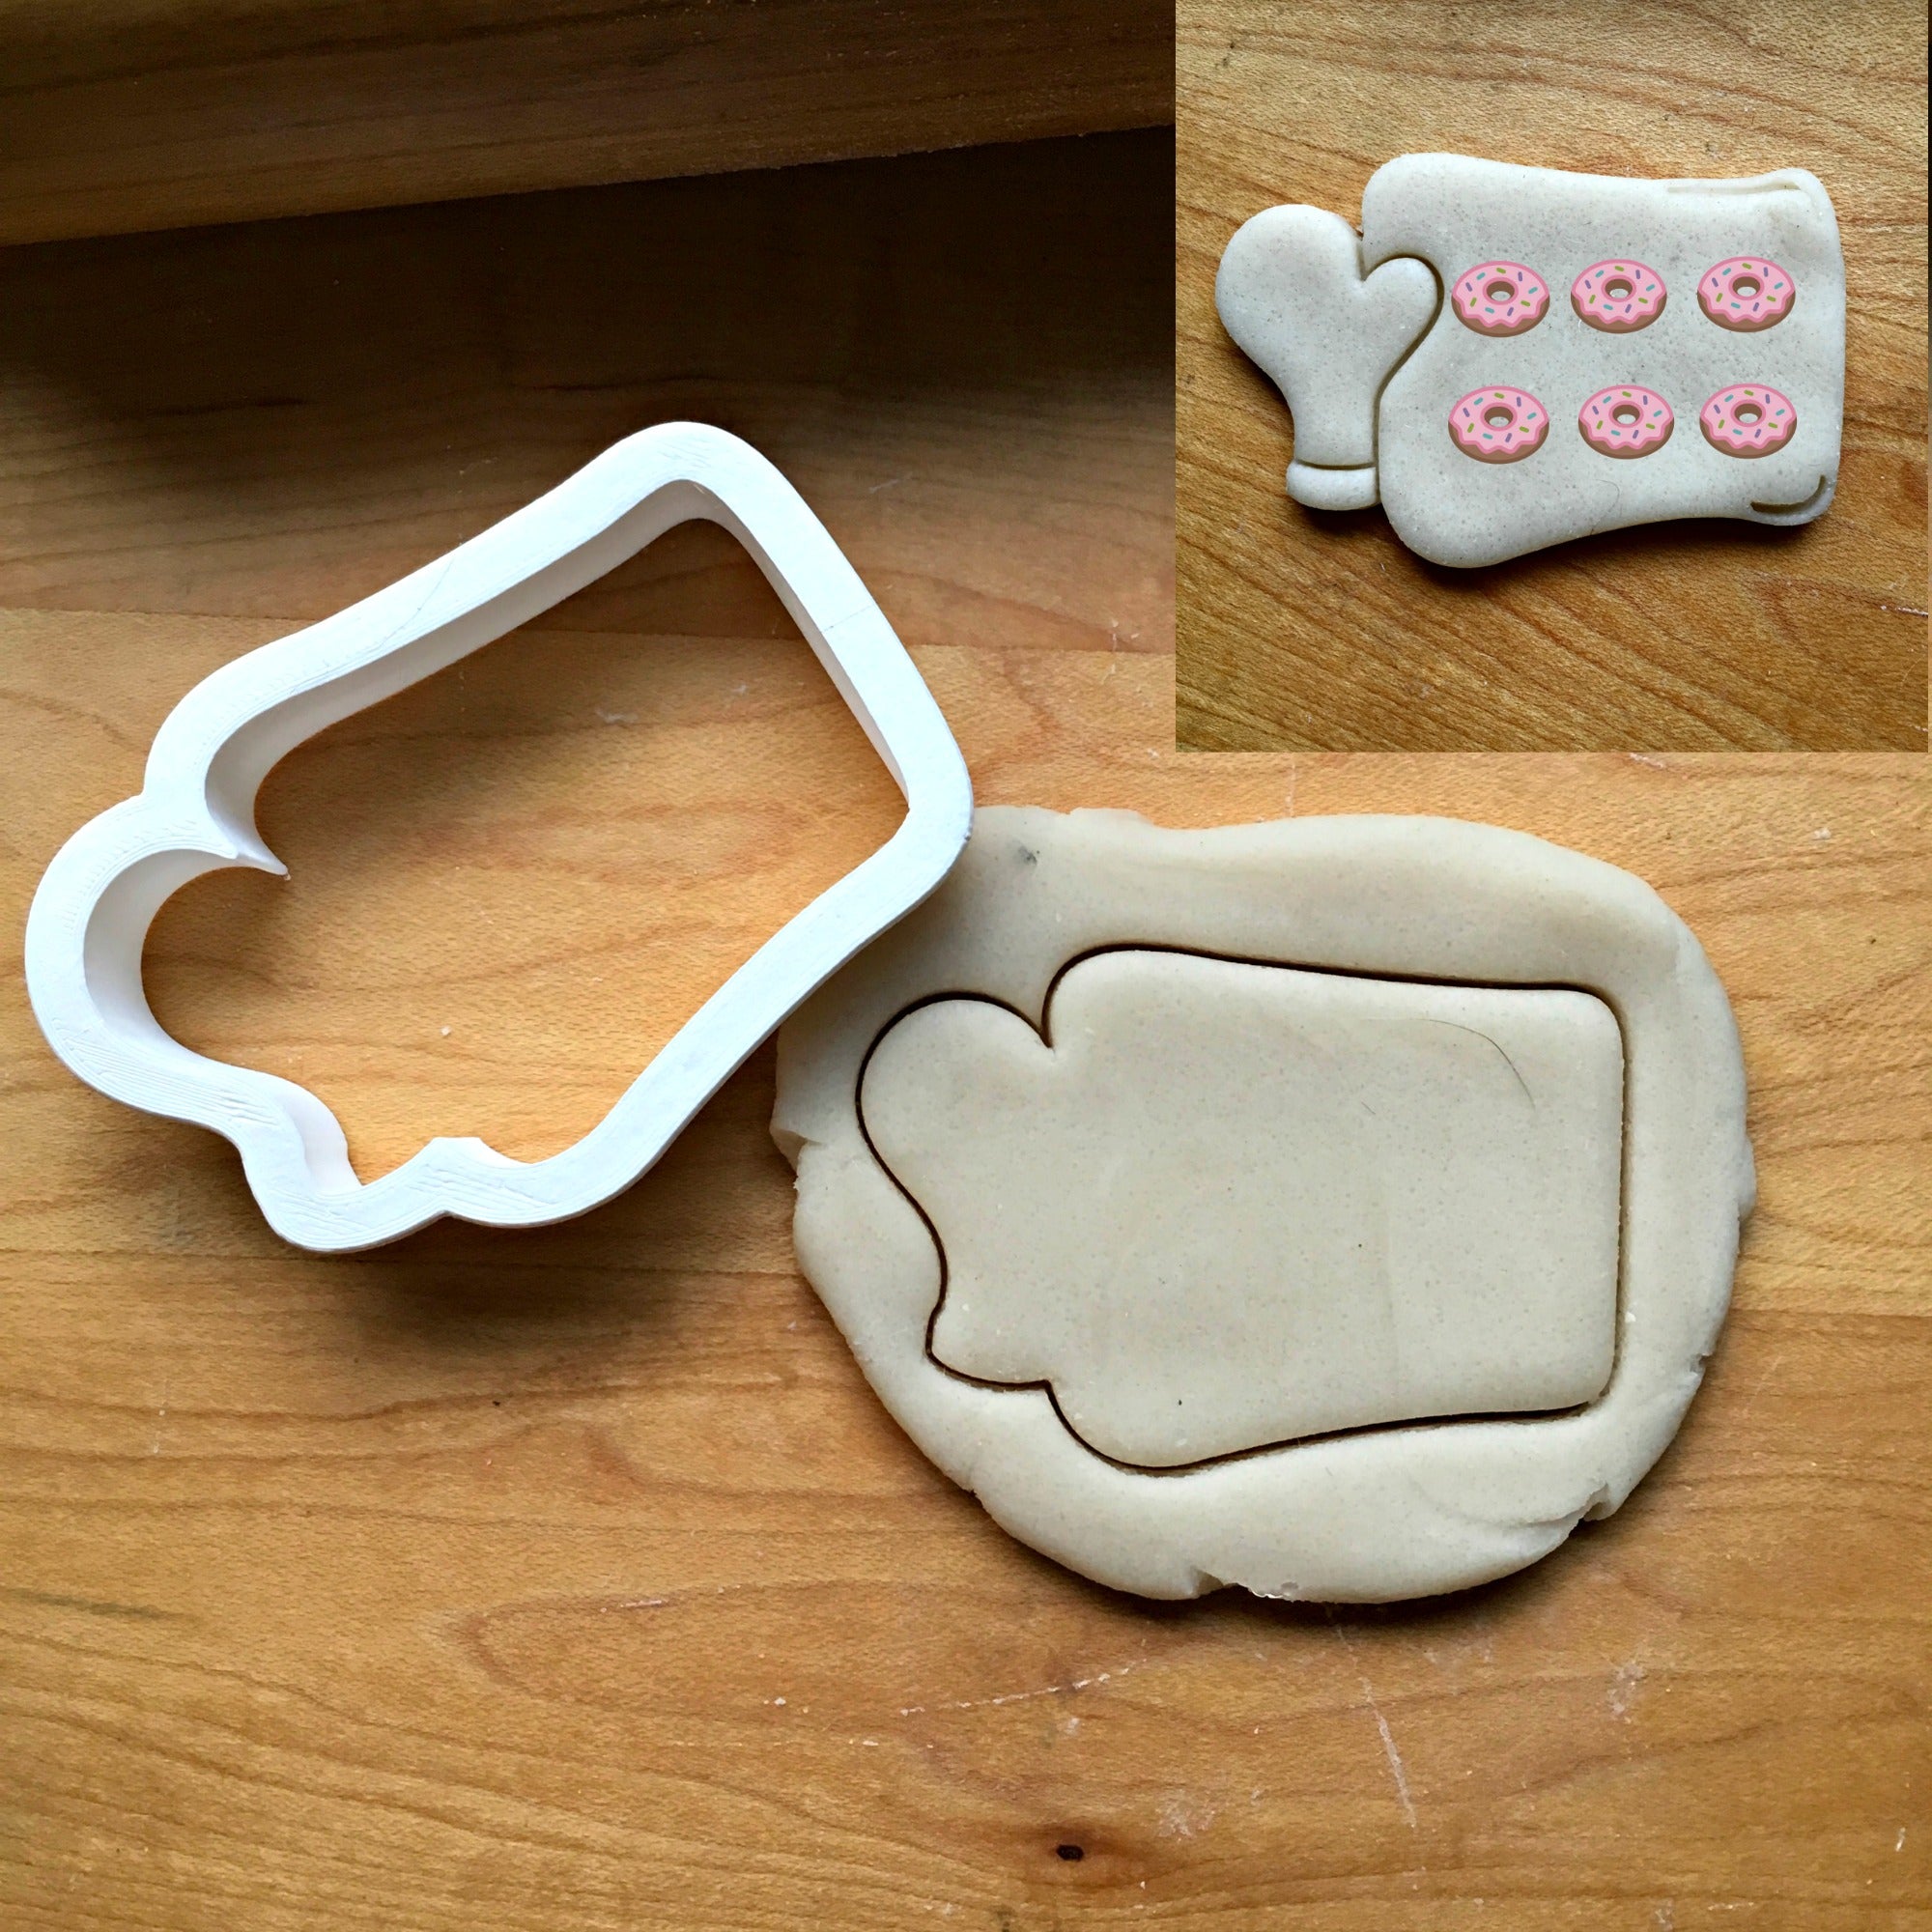 Cookie/Baking Sheet with Mitt Cookie Cutter/Dishwasher Safe